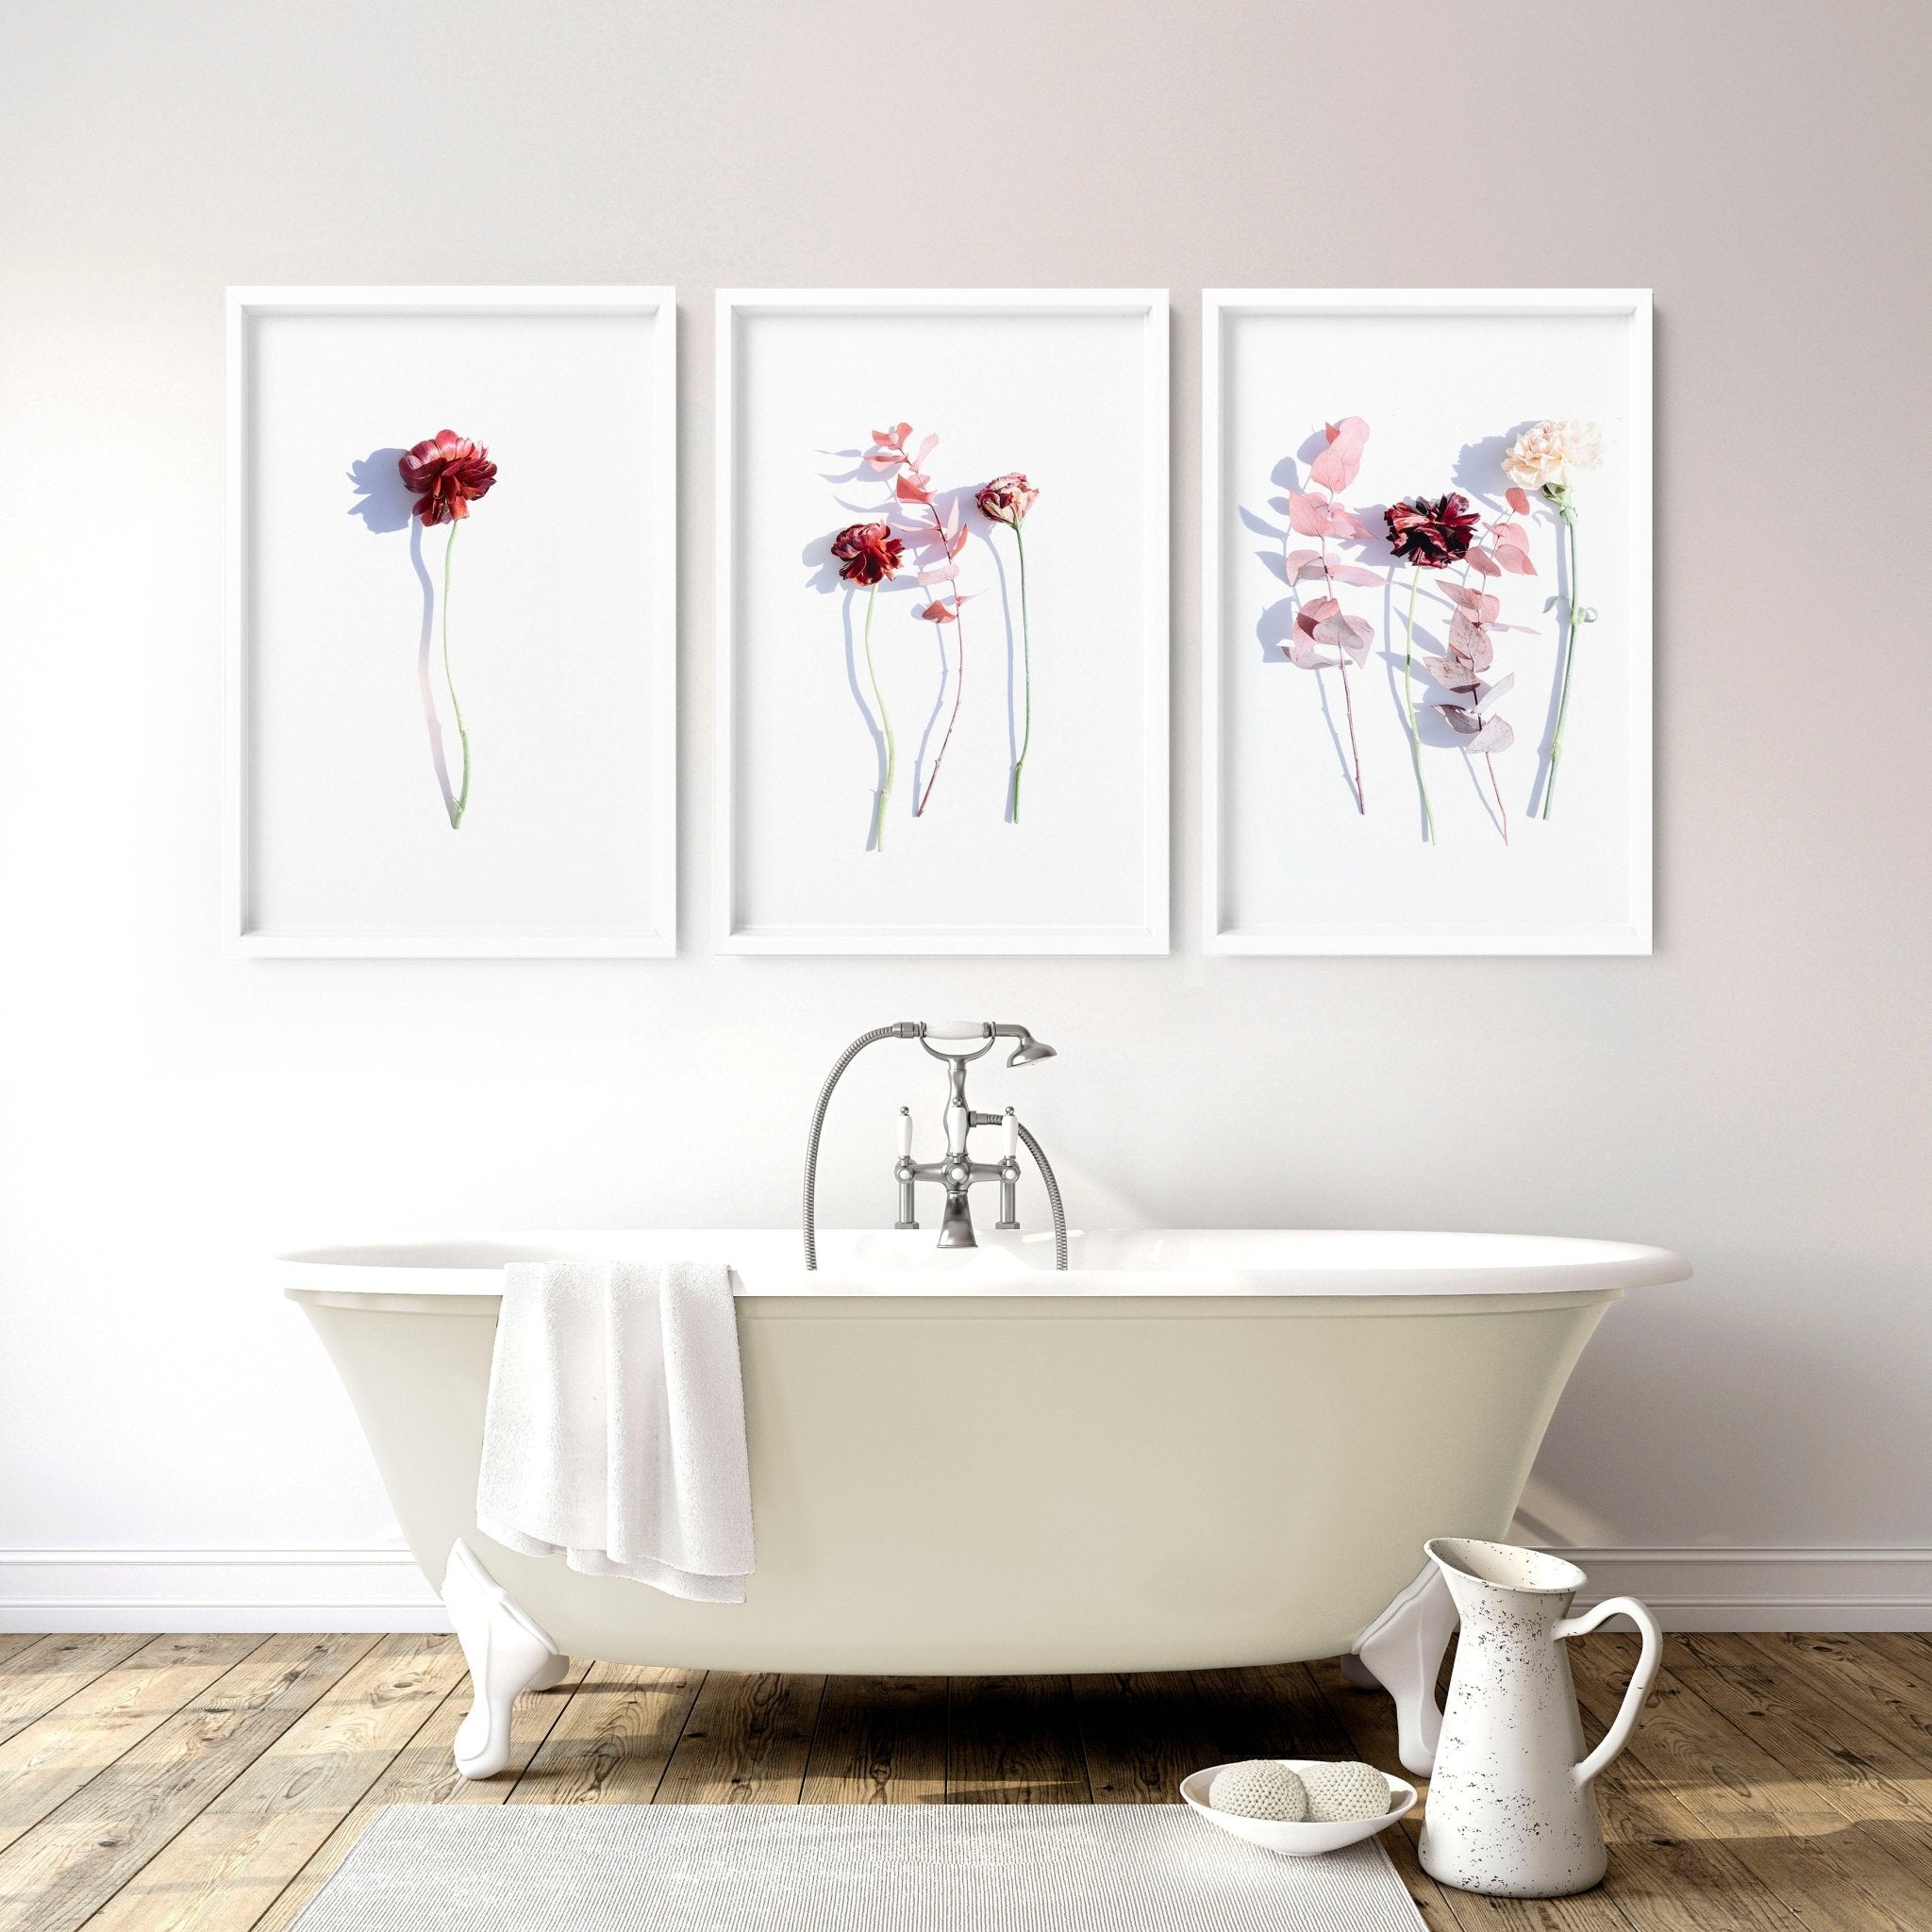 Wall art in bathroom | set of 3 wall art prints - About Wall Art